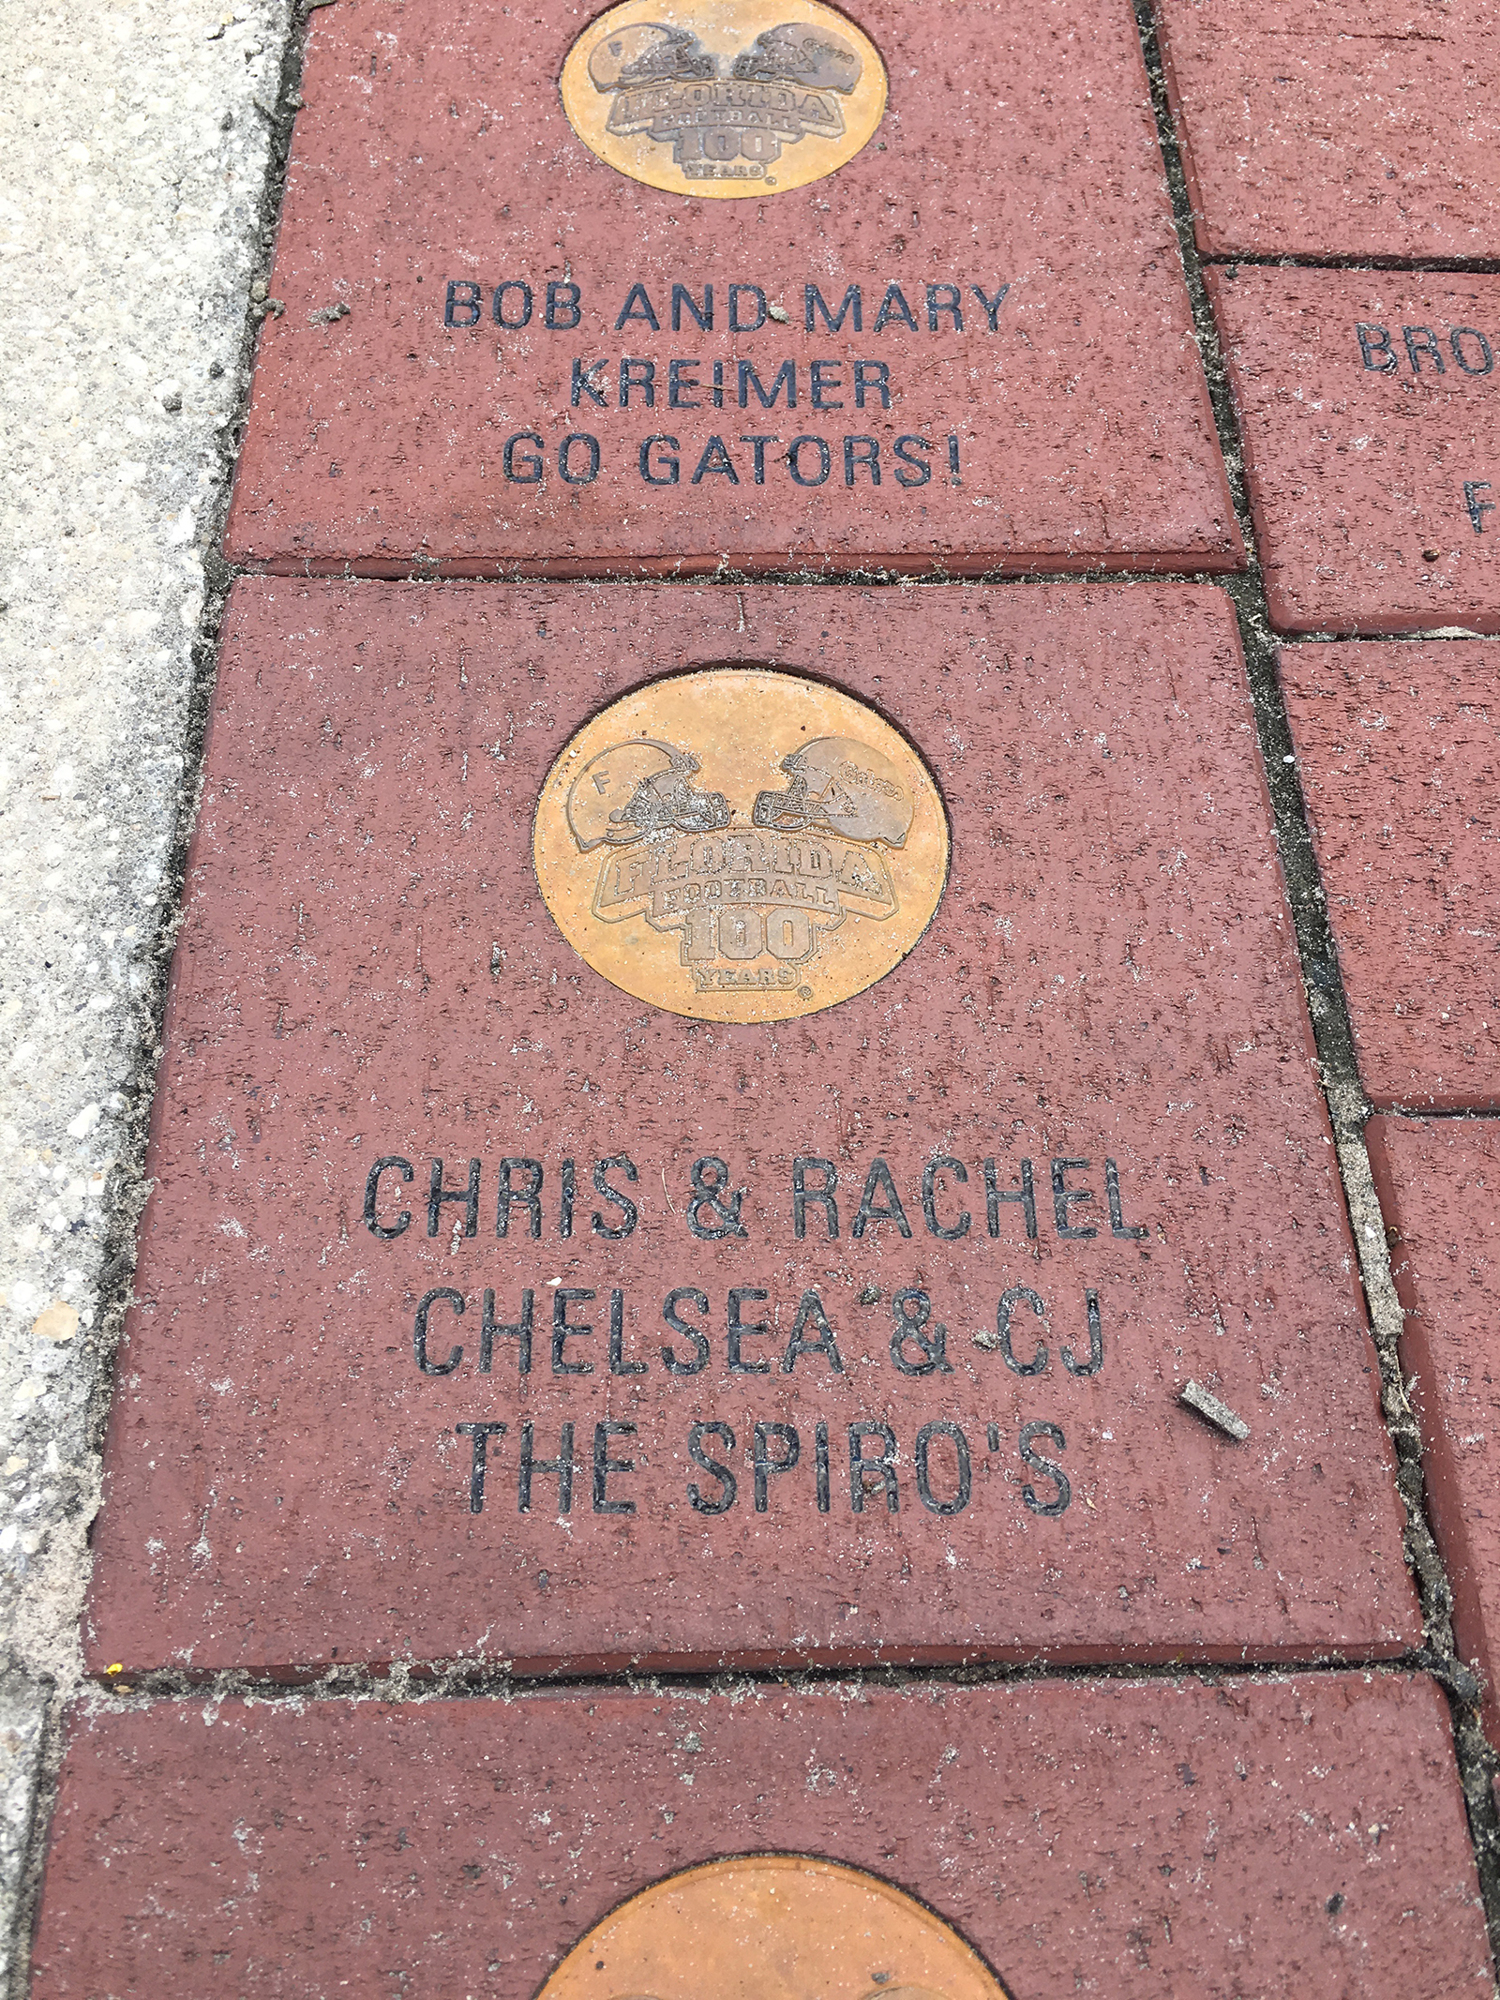 The Spiro family brick at Ben Hill Griffin Stadium in Gainesville. Courtesy Christopher Spiro